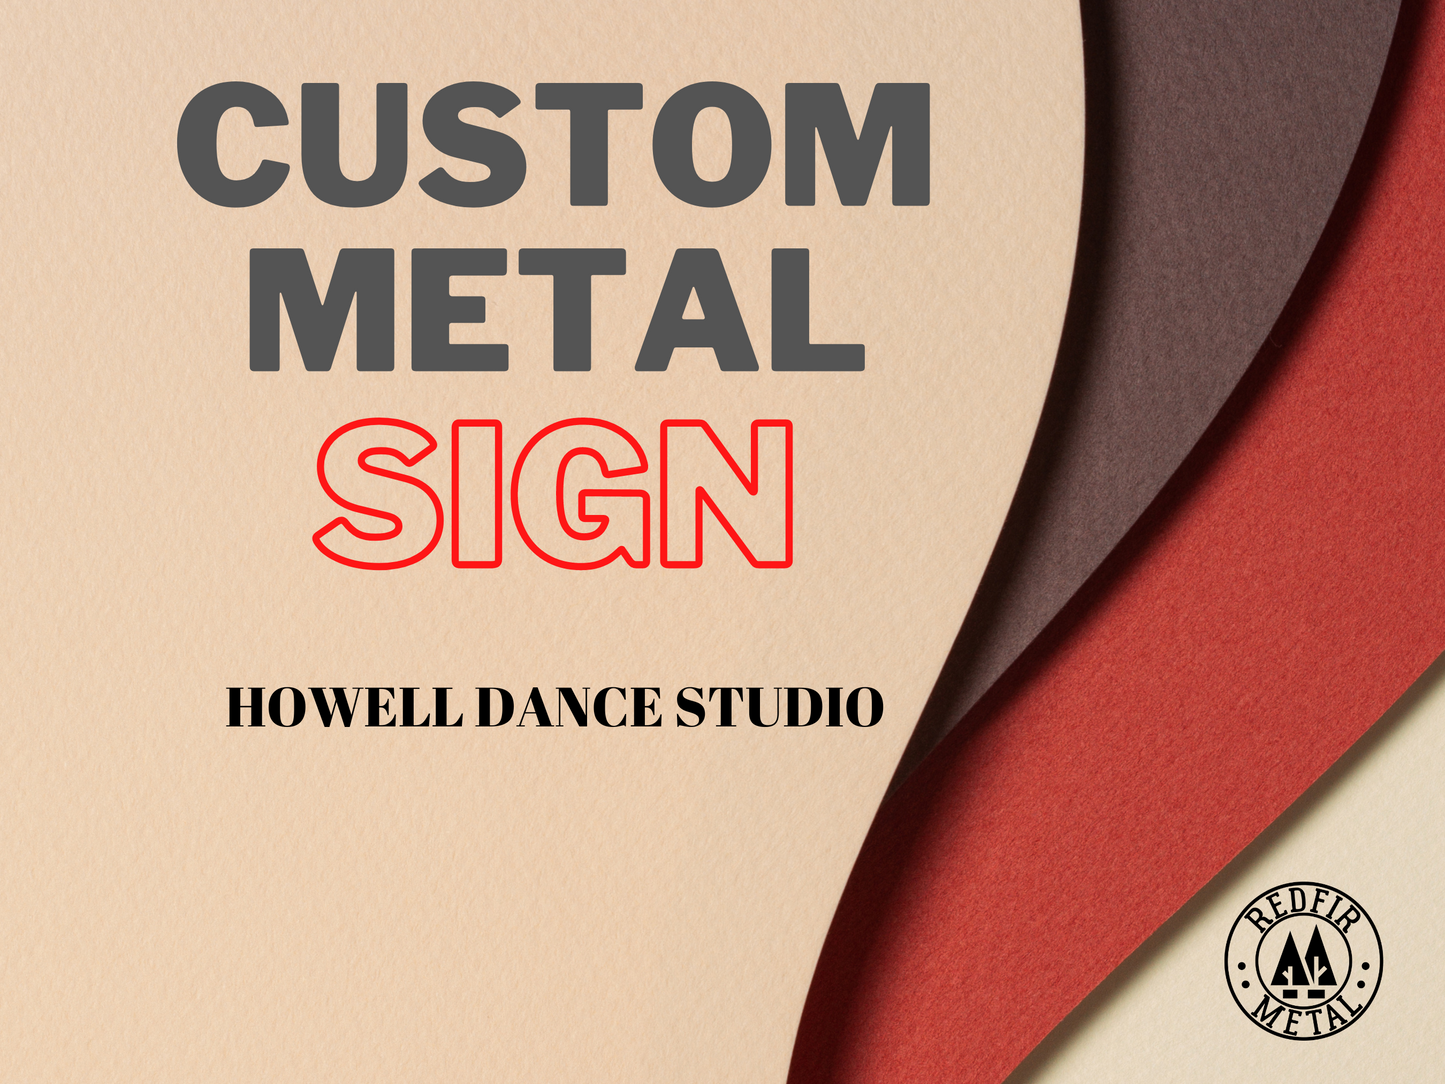 Custom Metal Sign, Howell Dance Studio